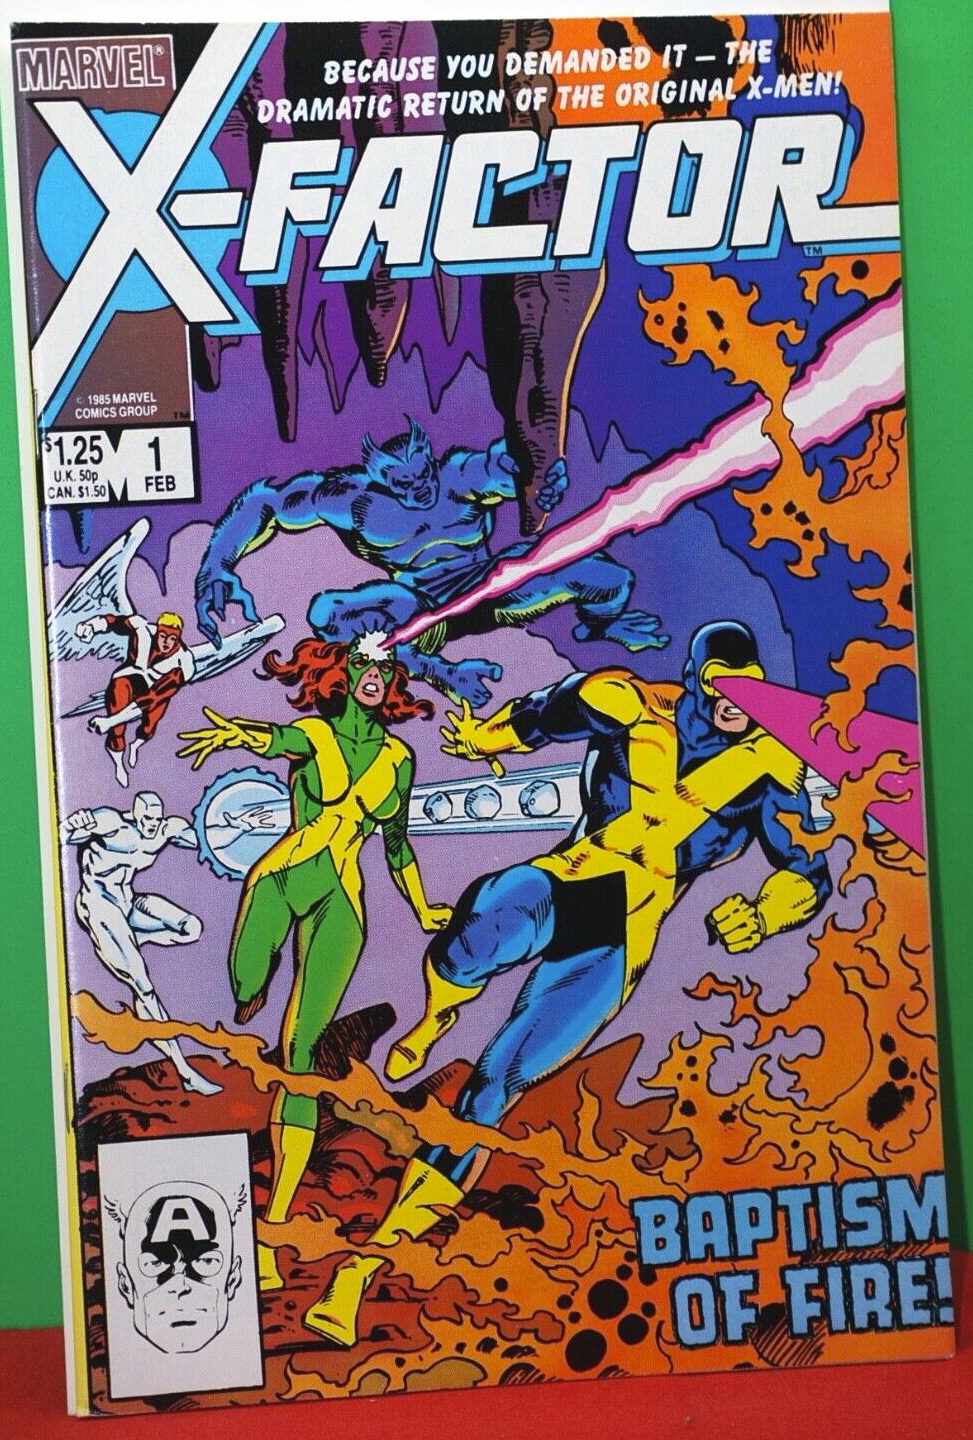 X-Factor 1 Marvel Comics 1985 Baby Cable X-Men Feb